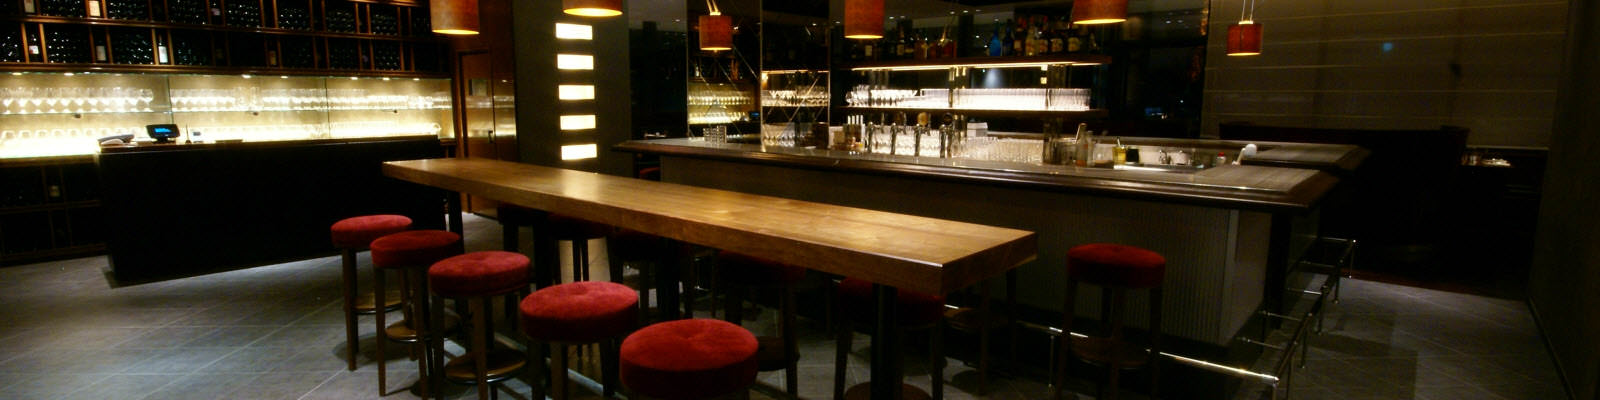 Modern bar design and furniture